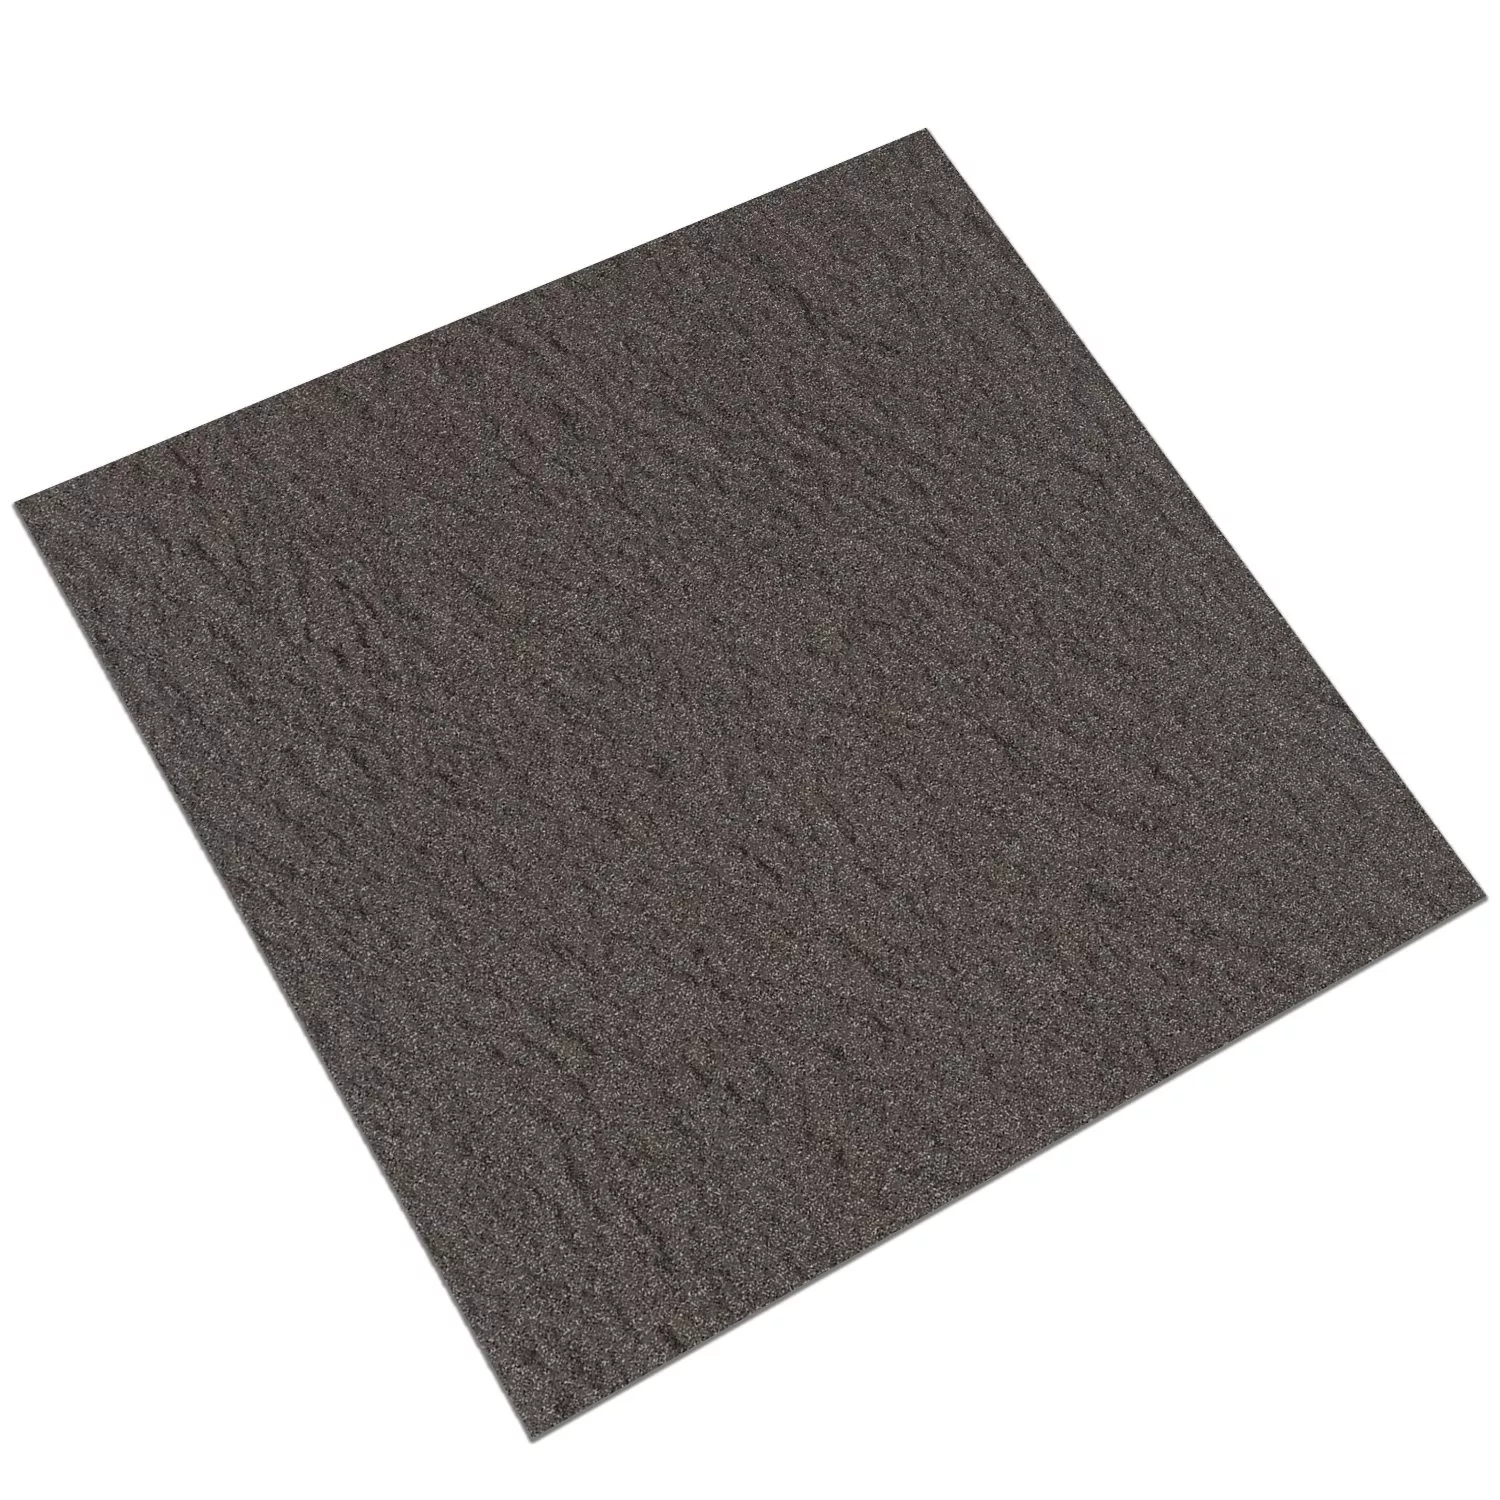 Sample Floor Tiles Courage Fine Grain R11/B Anthracite 20x20cm